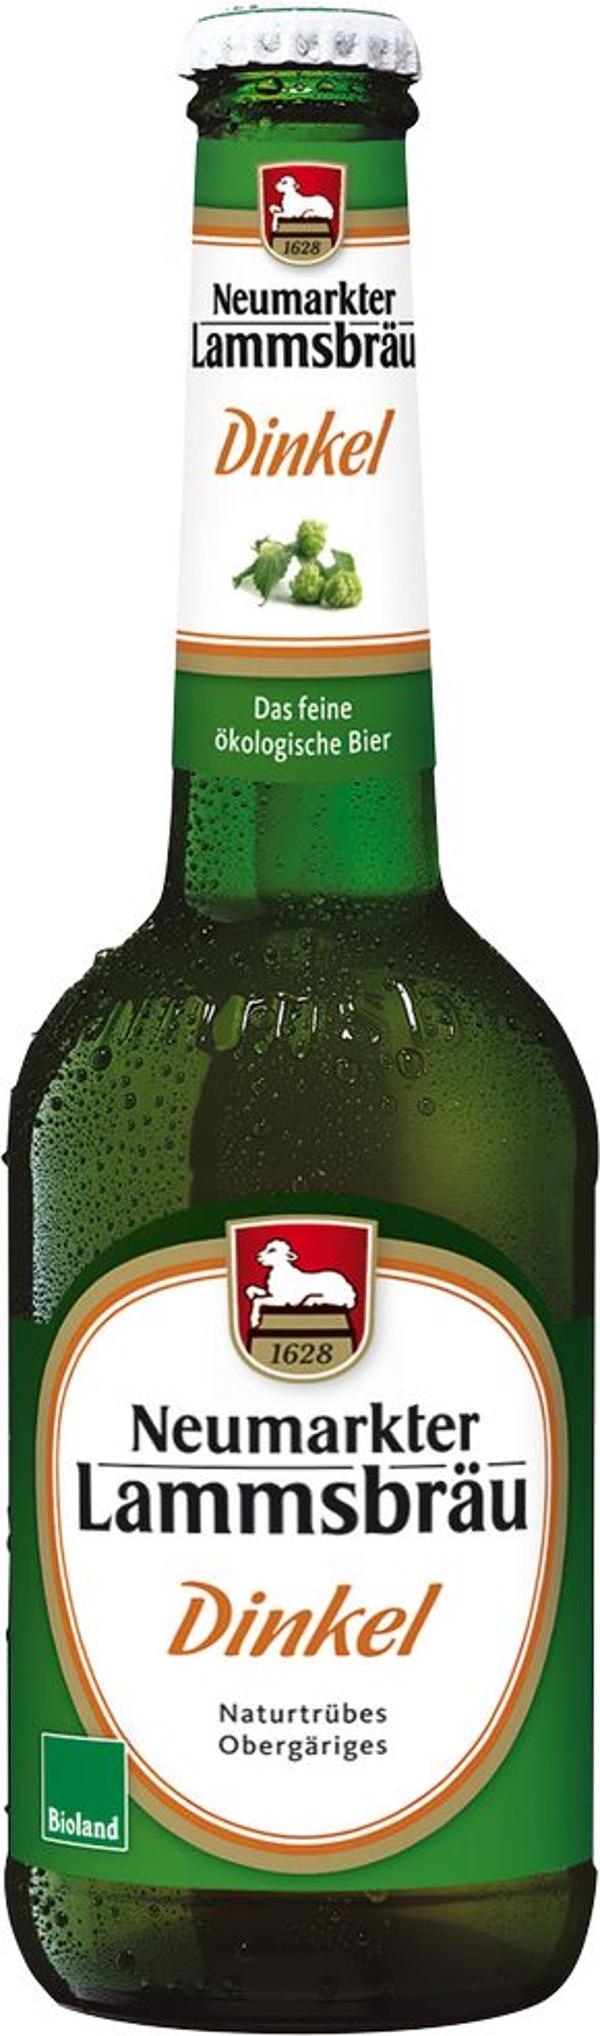 Produktfoto zu VPE Bier Lammsbräu Dinkel 10x0,33 l Neumarkter Lammsbräu